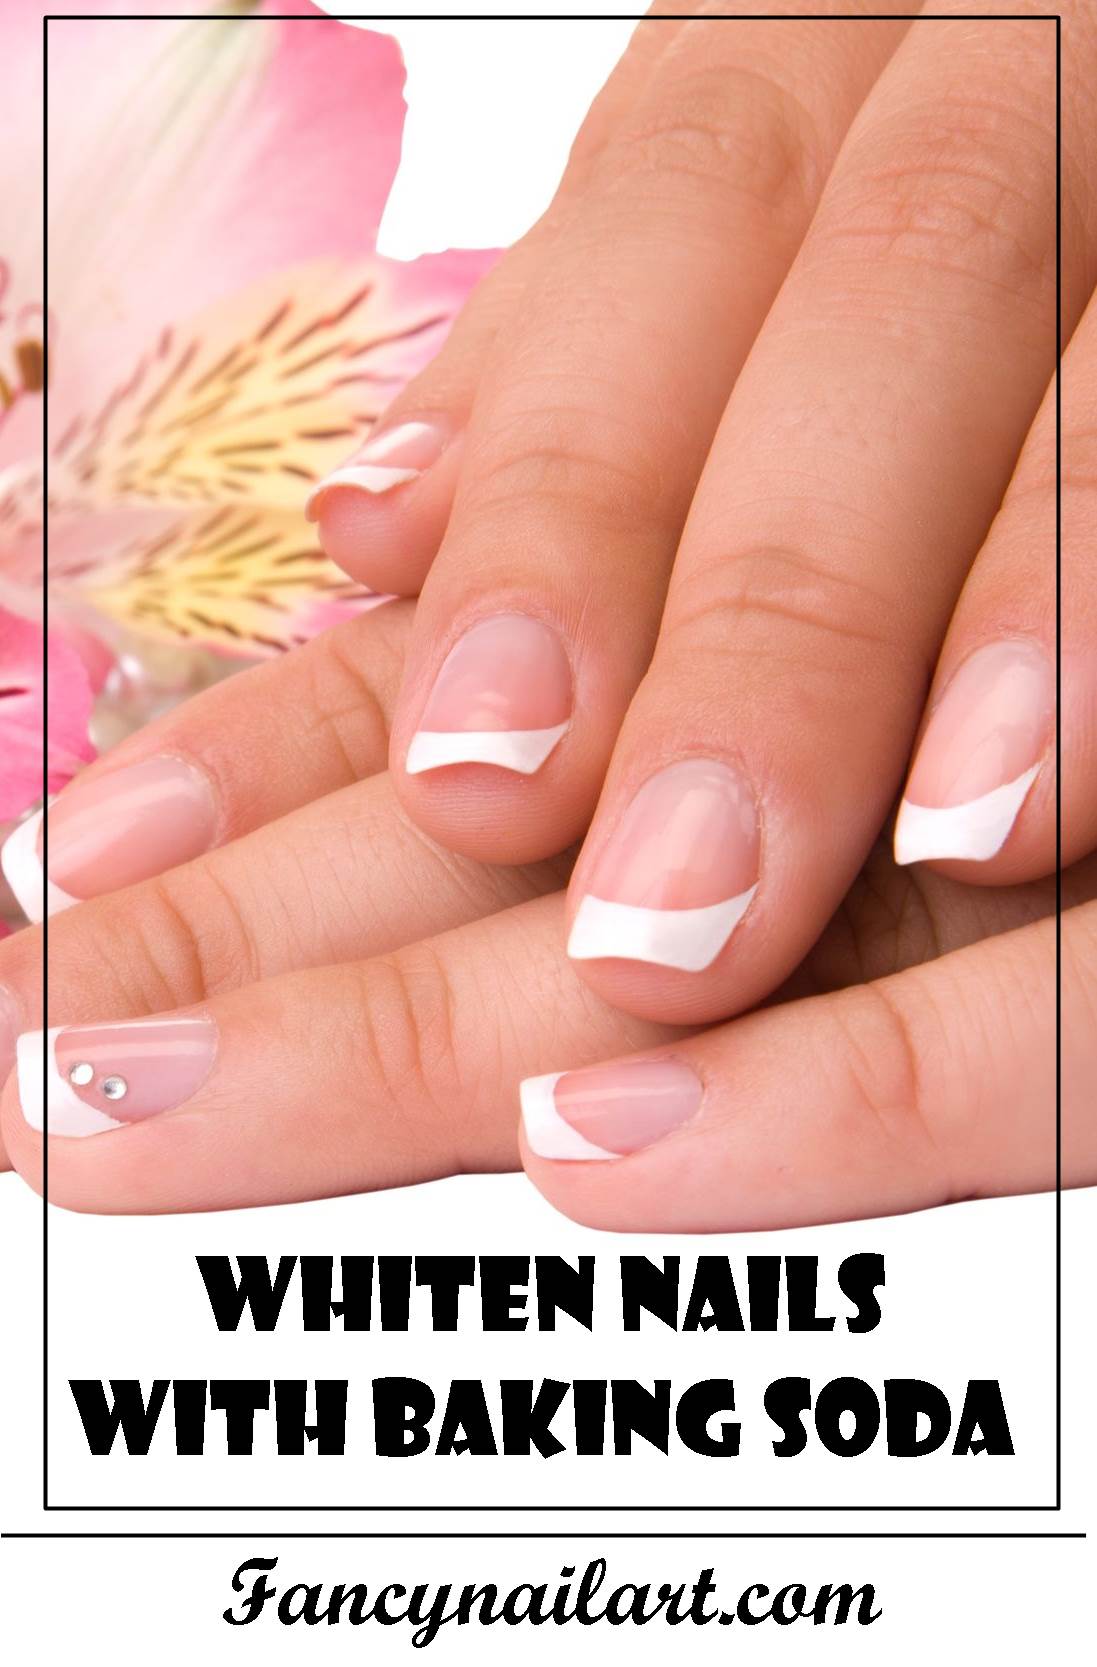 Whiten Nails With Baking Soda - fancynailart.com